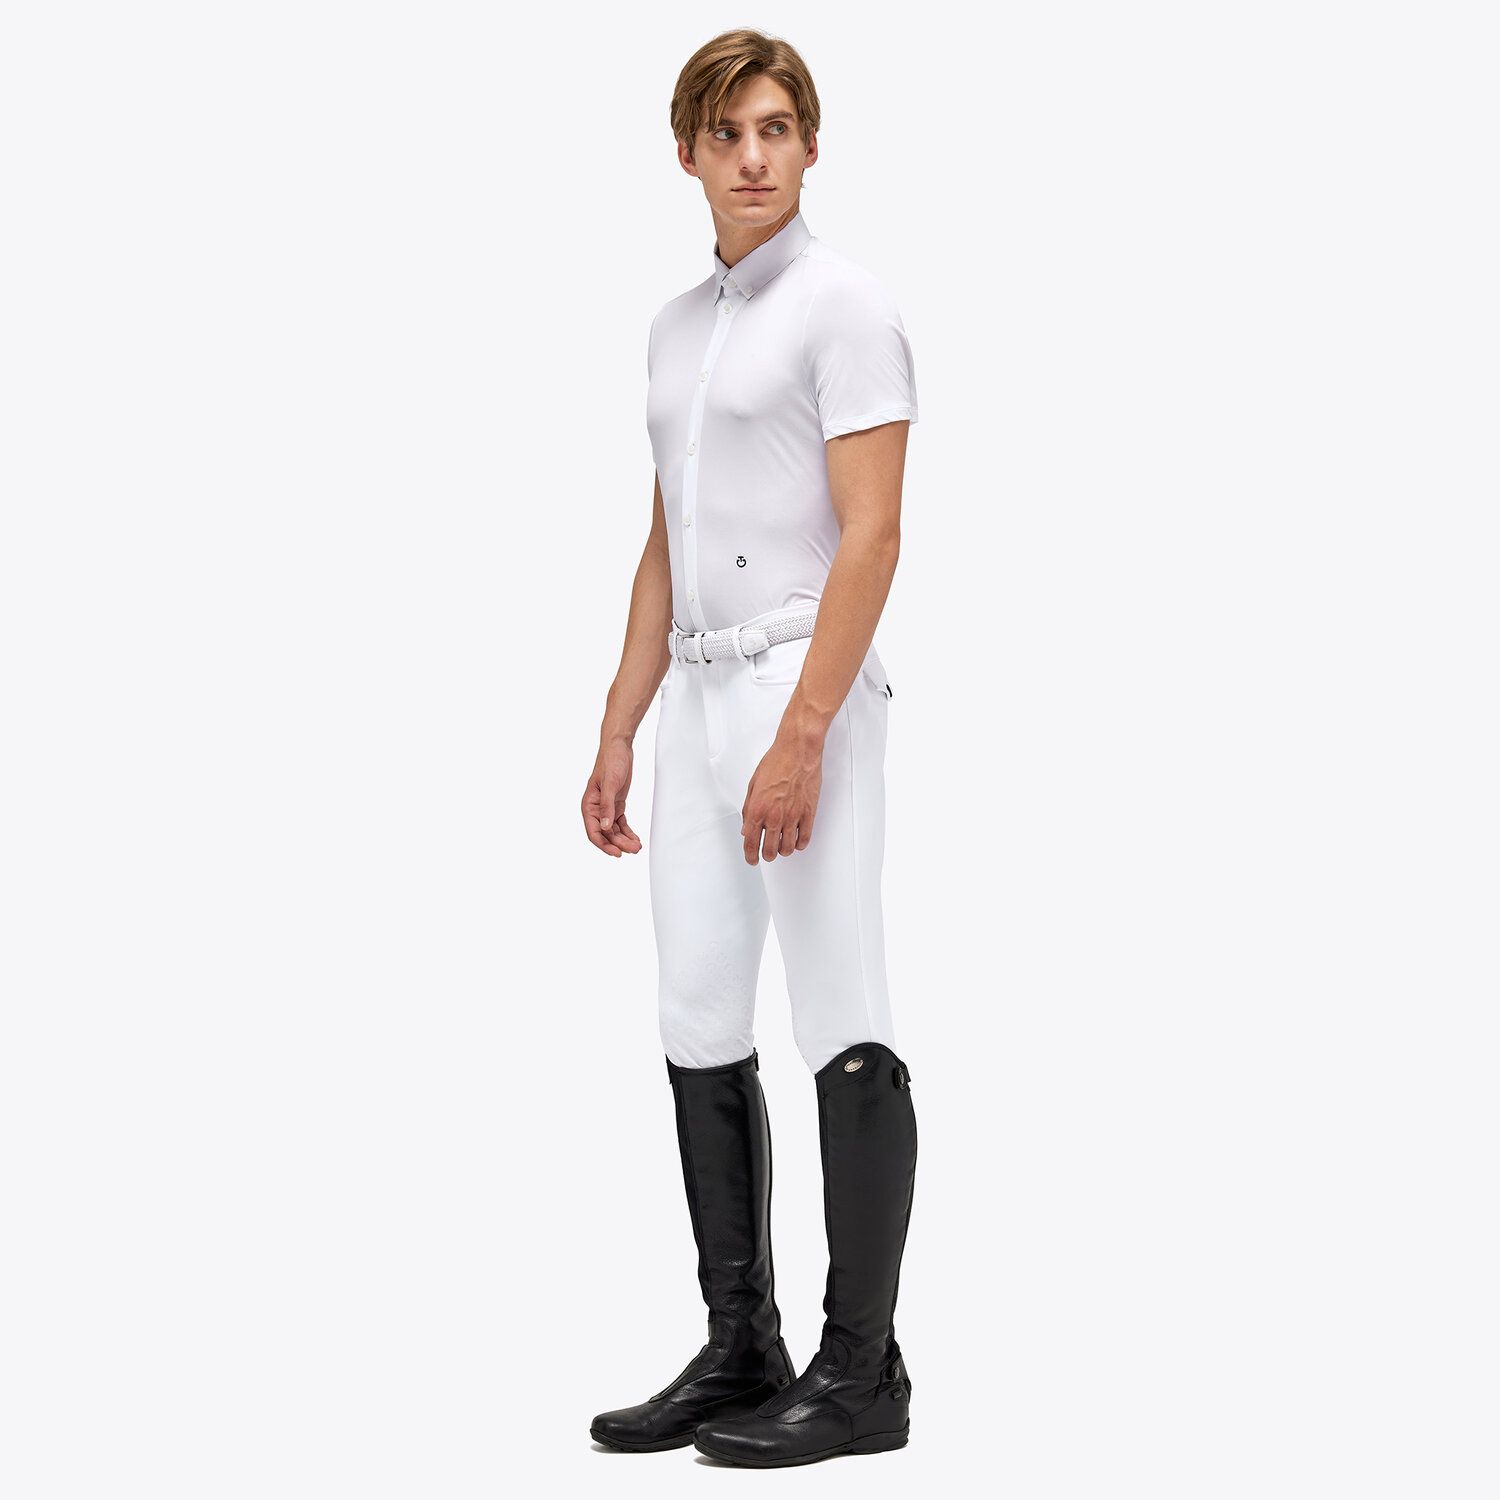 Cavalleria Toscana Men's competition shirt WHITE-2